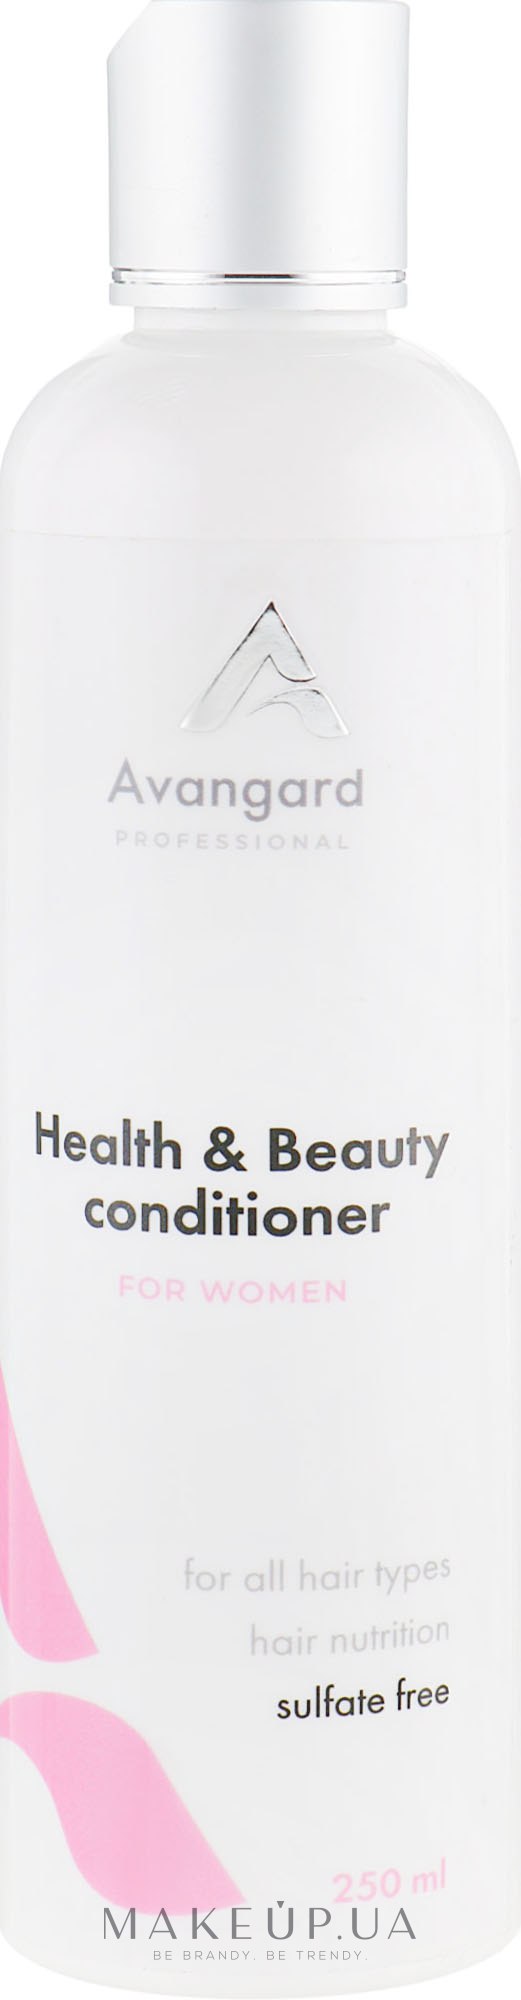 Професійний бальзам-кондиціонер для щоденного догляду за волоссям - Avangard Professional Health & Beauty Conditioner — фото 250ml